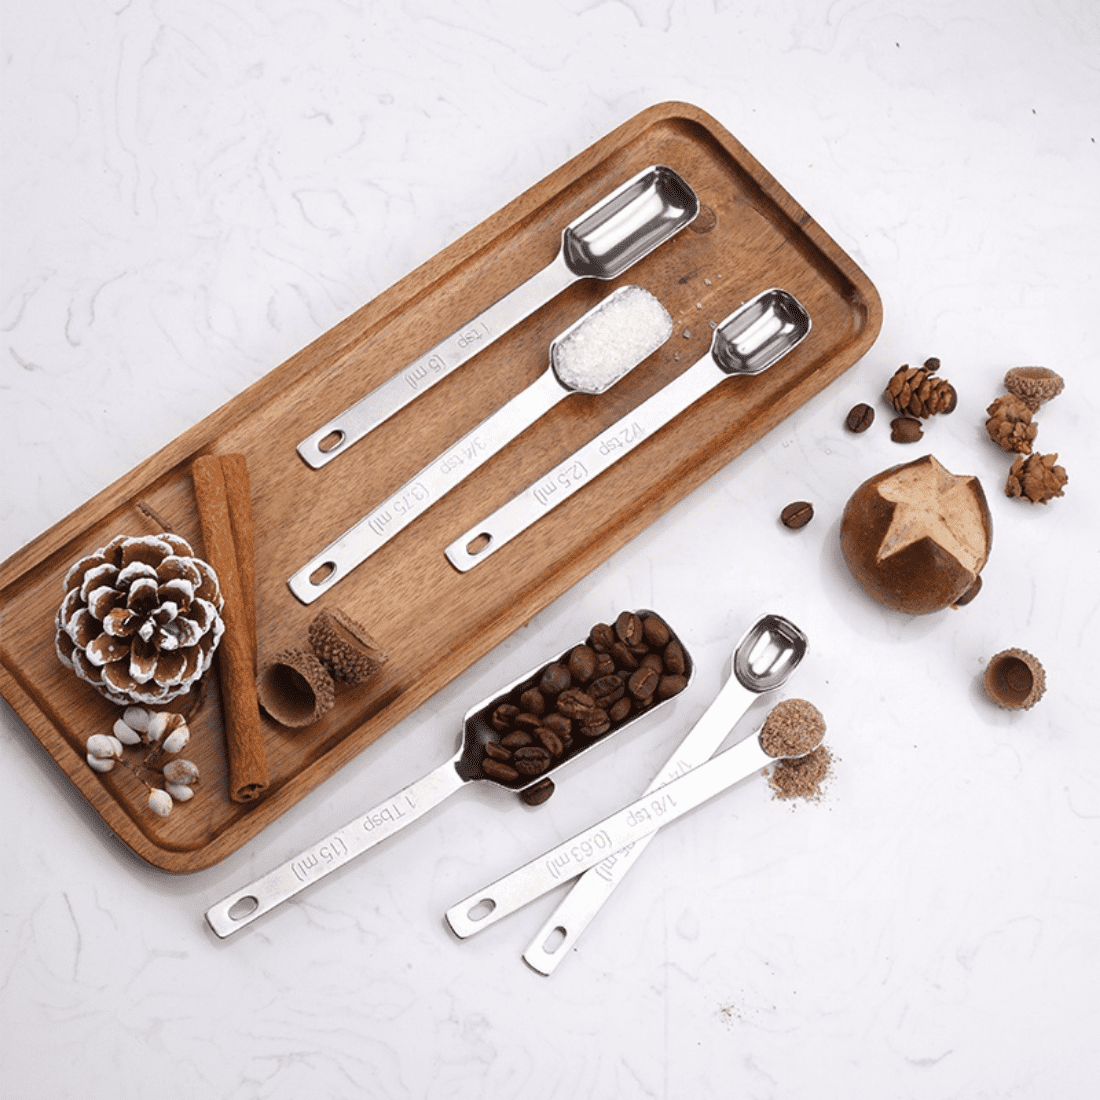 7pcs Measuring Spoon Set With Leveler Baking Narrow Long Handle